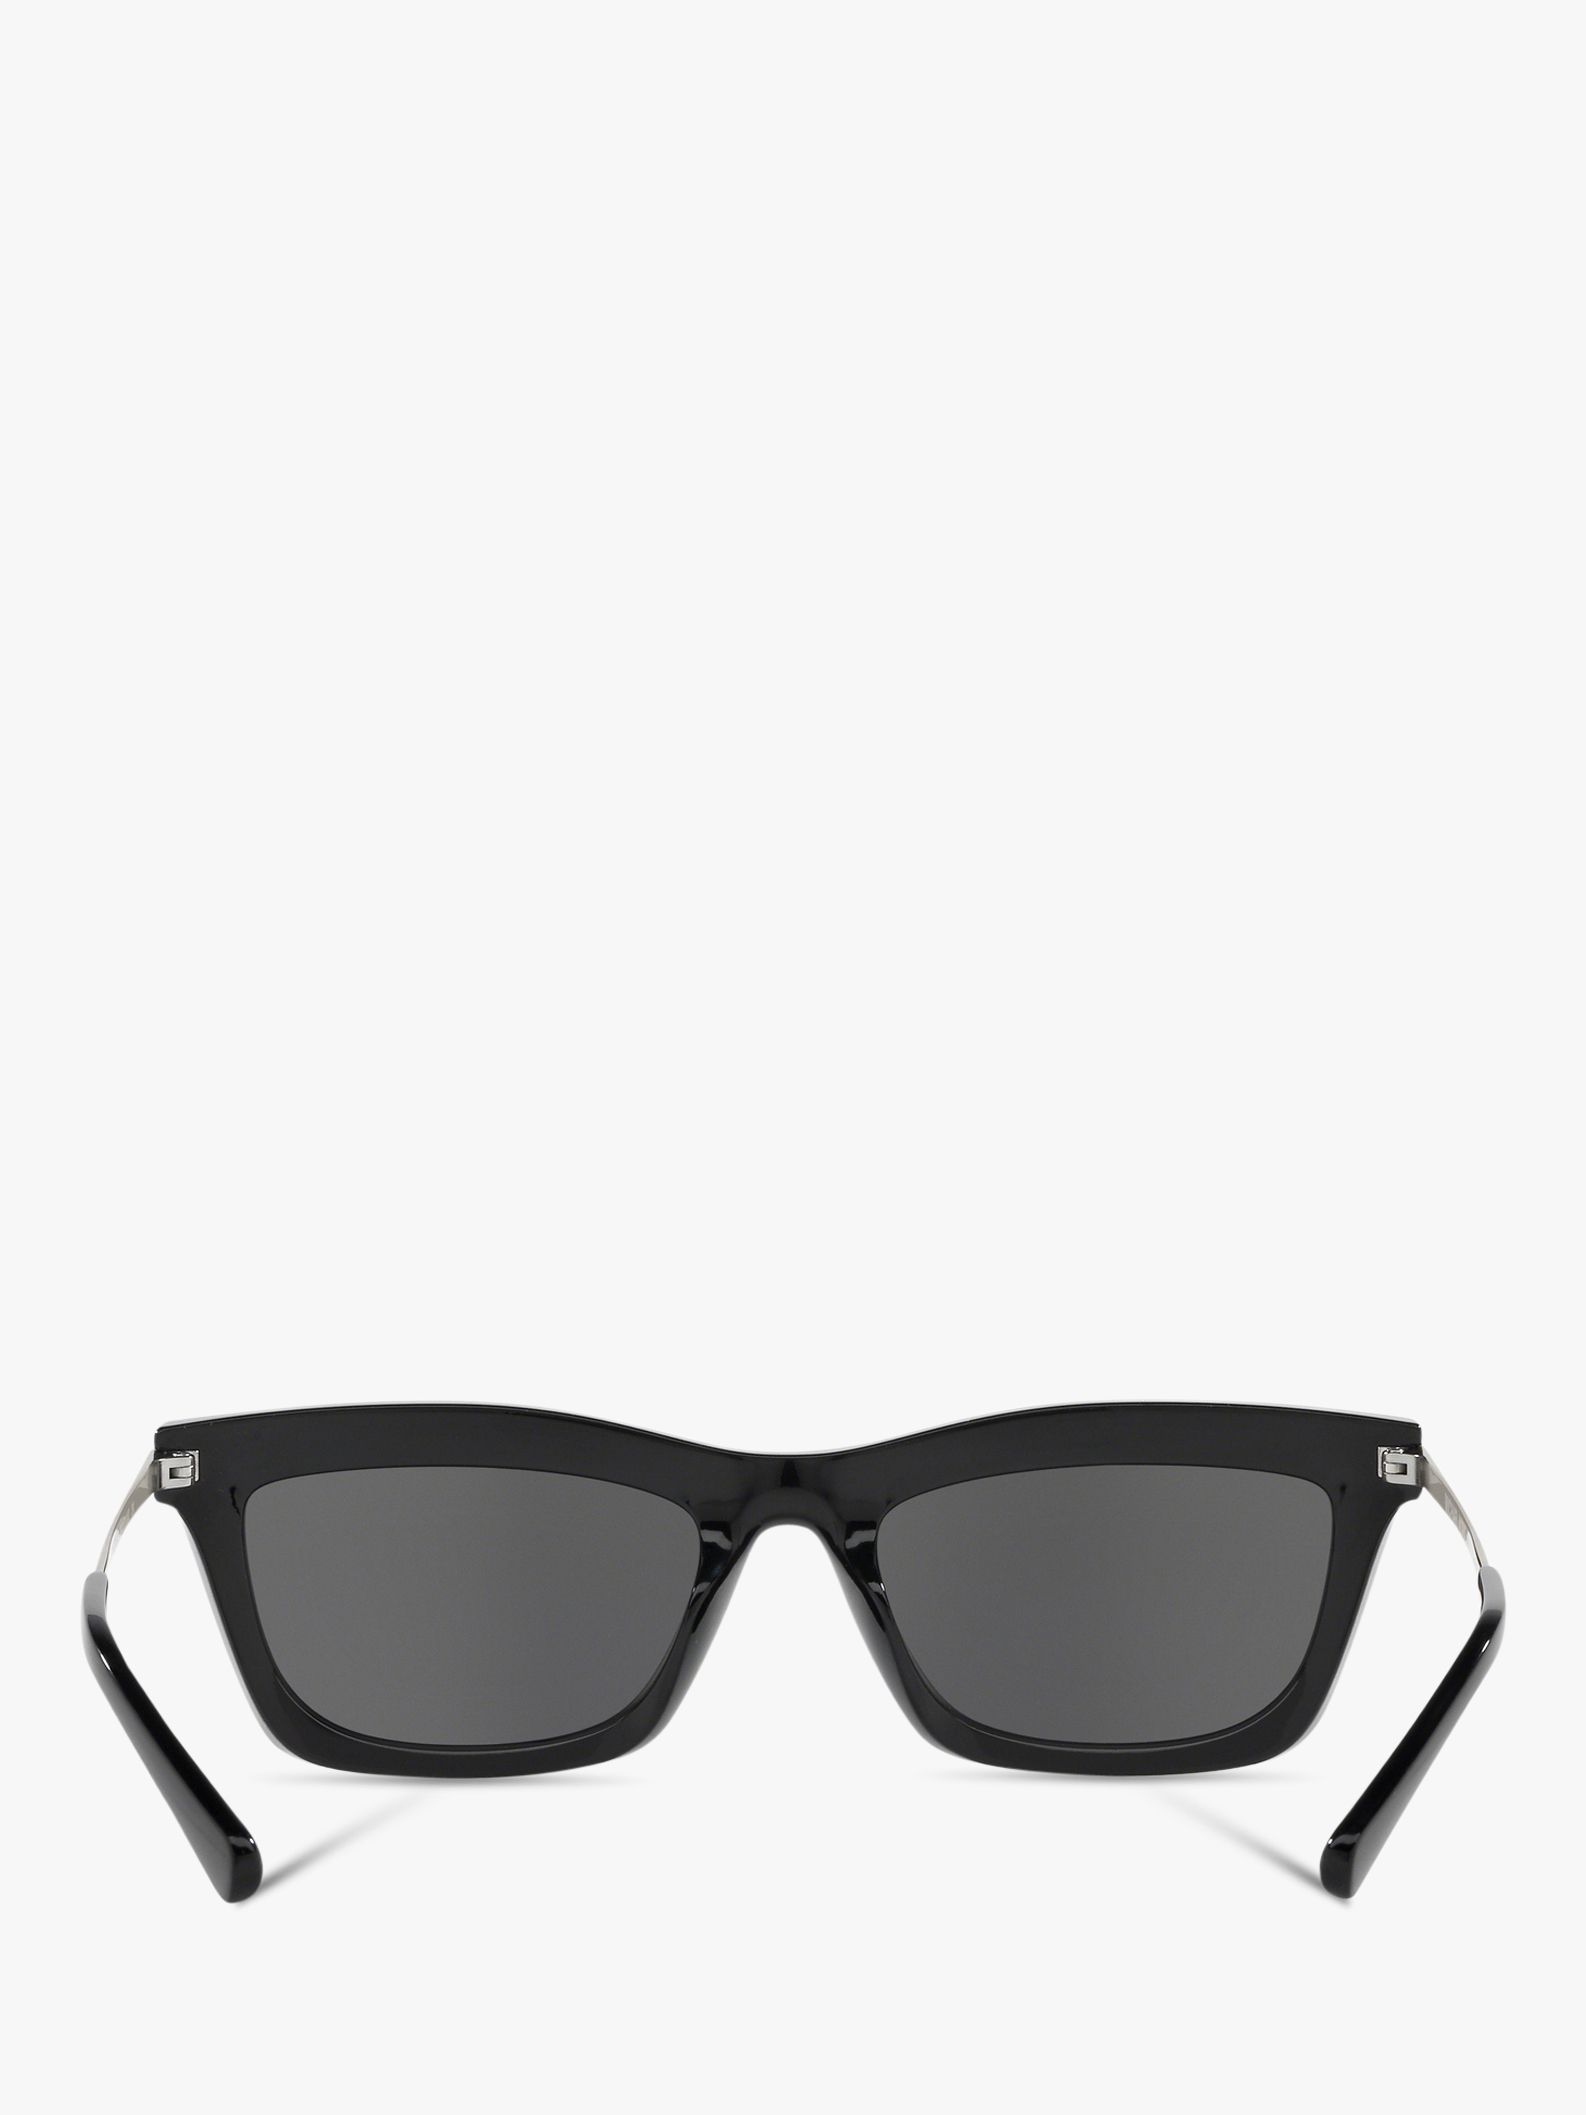 Buy Michael Kors MK2087U Women's Stowe Square Sunglasses Online at johnlewis.com